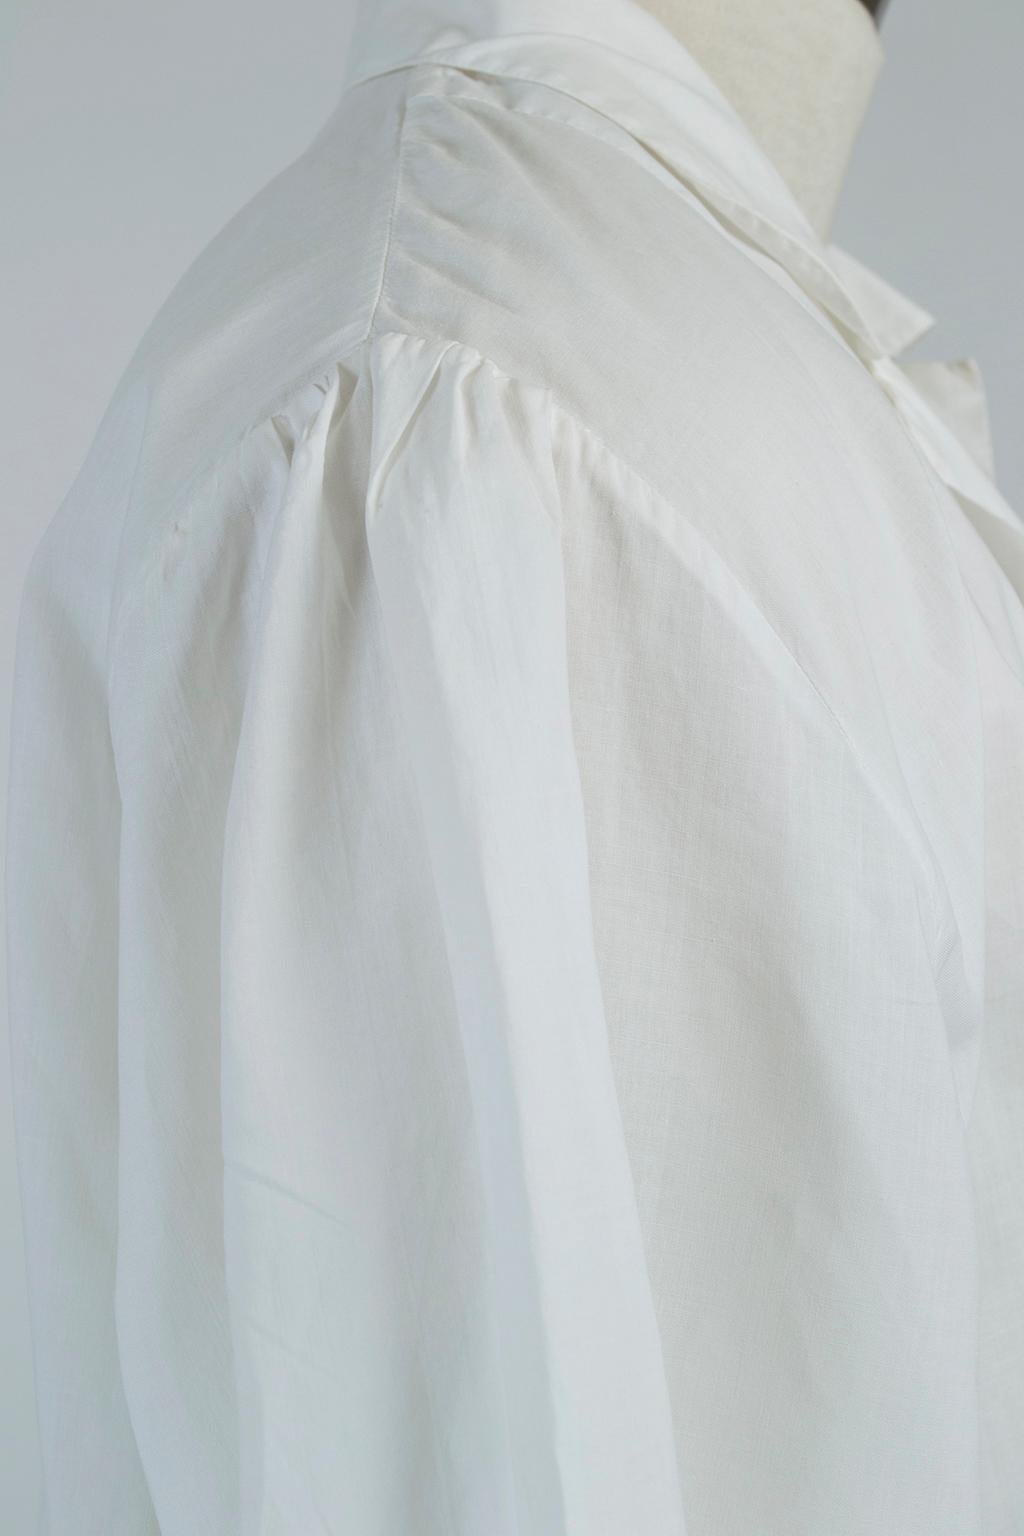 Edwardian White Embroidered Cotton Poplin Nightshirt Sleep Shirt - M, 1910s For Sale 1